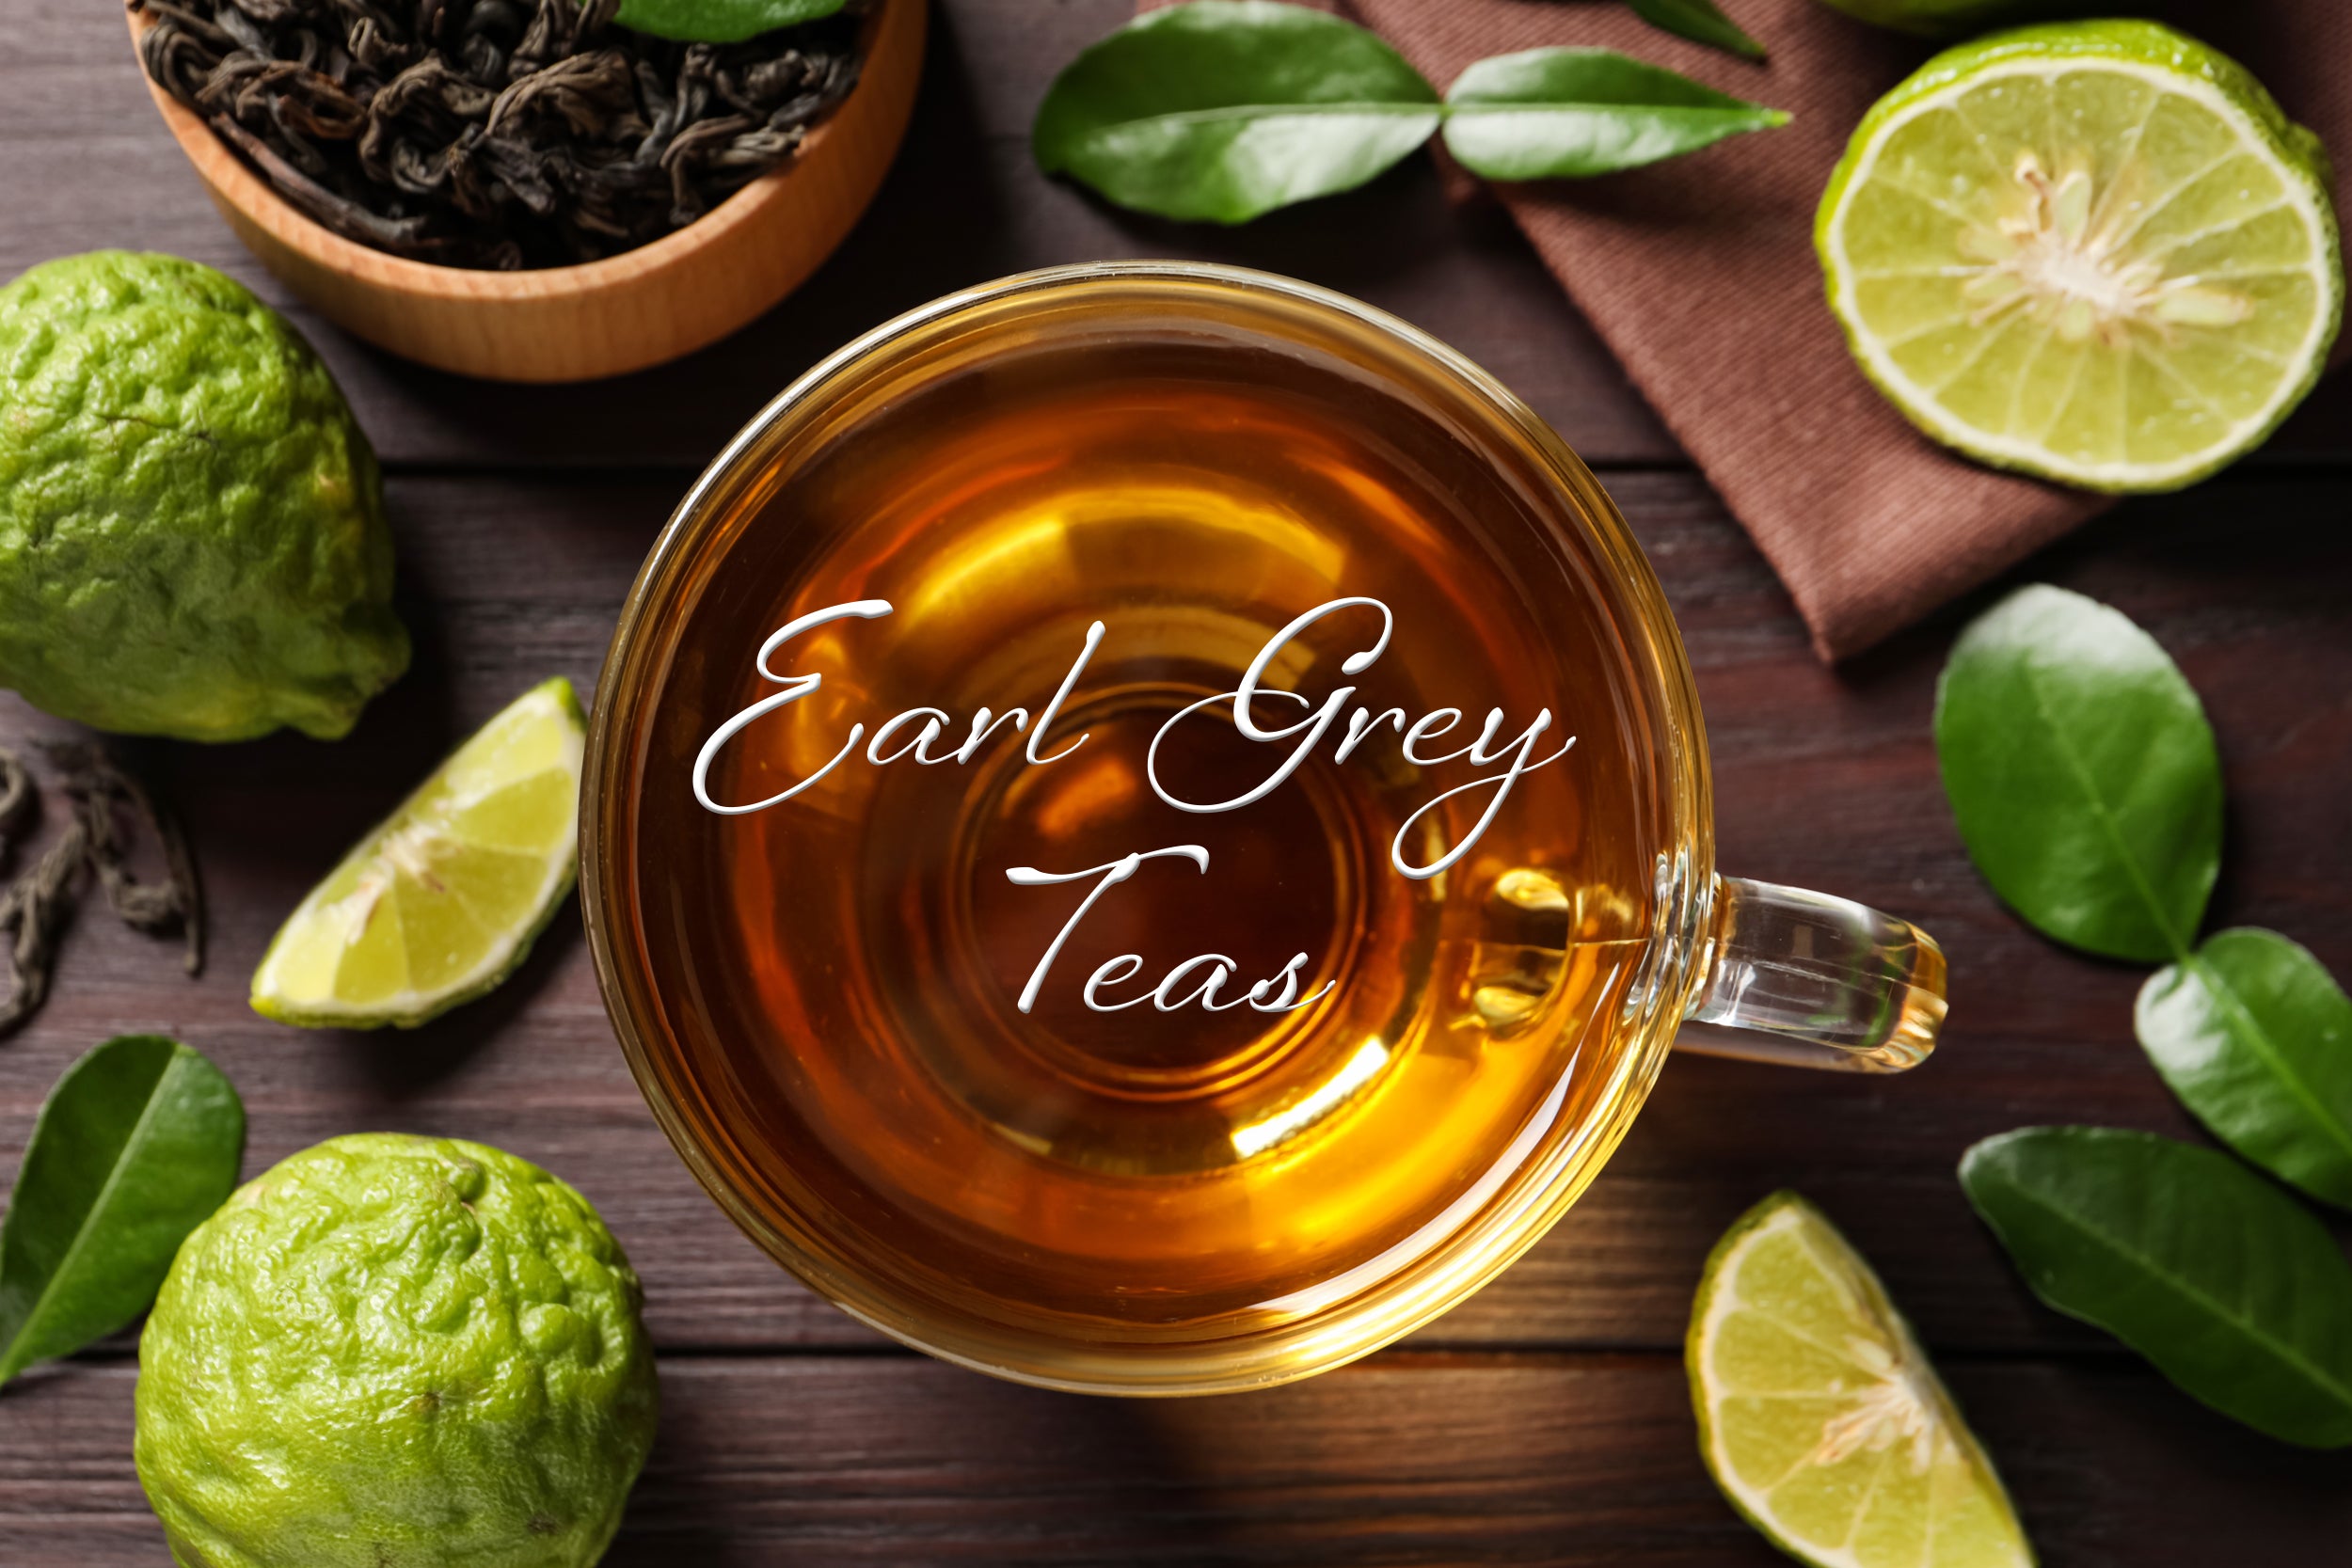 Uptown Tea Shop | Earl Grey Teas